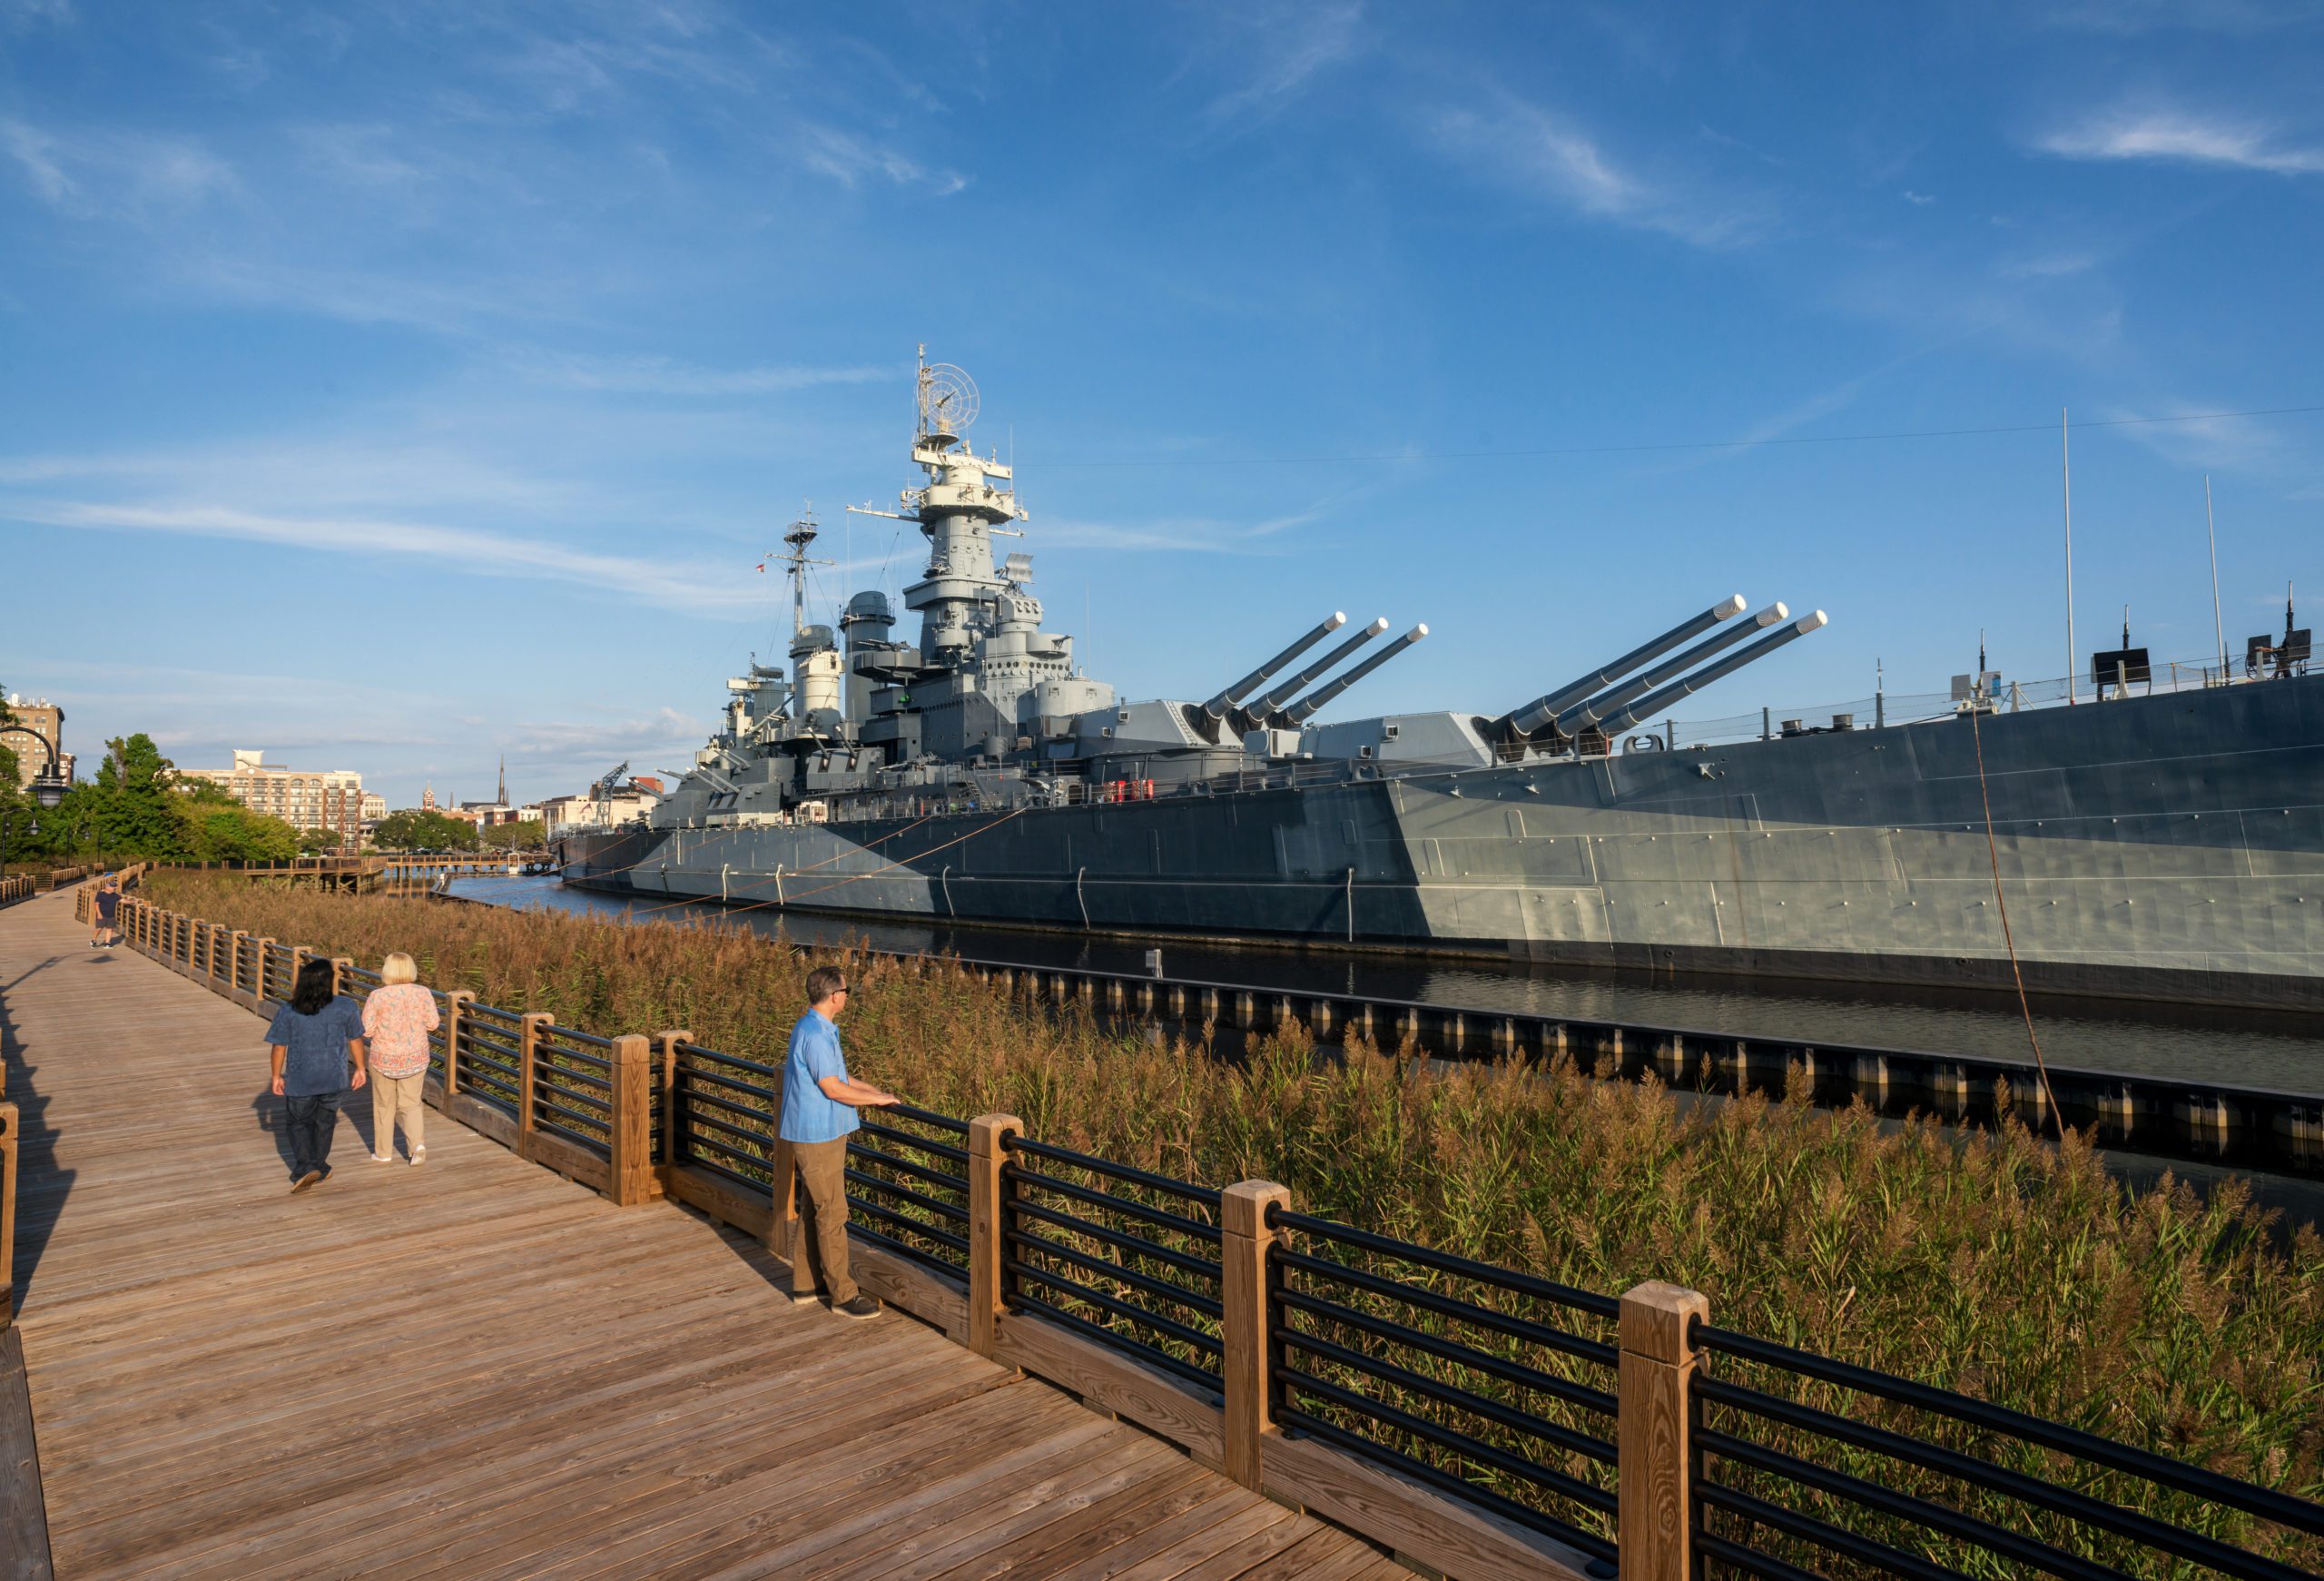 Battleship North Carolina